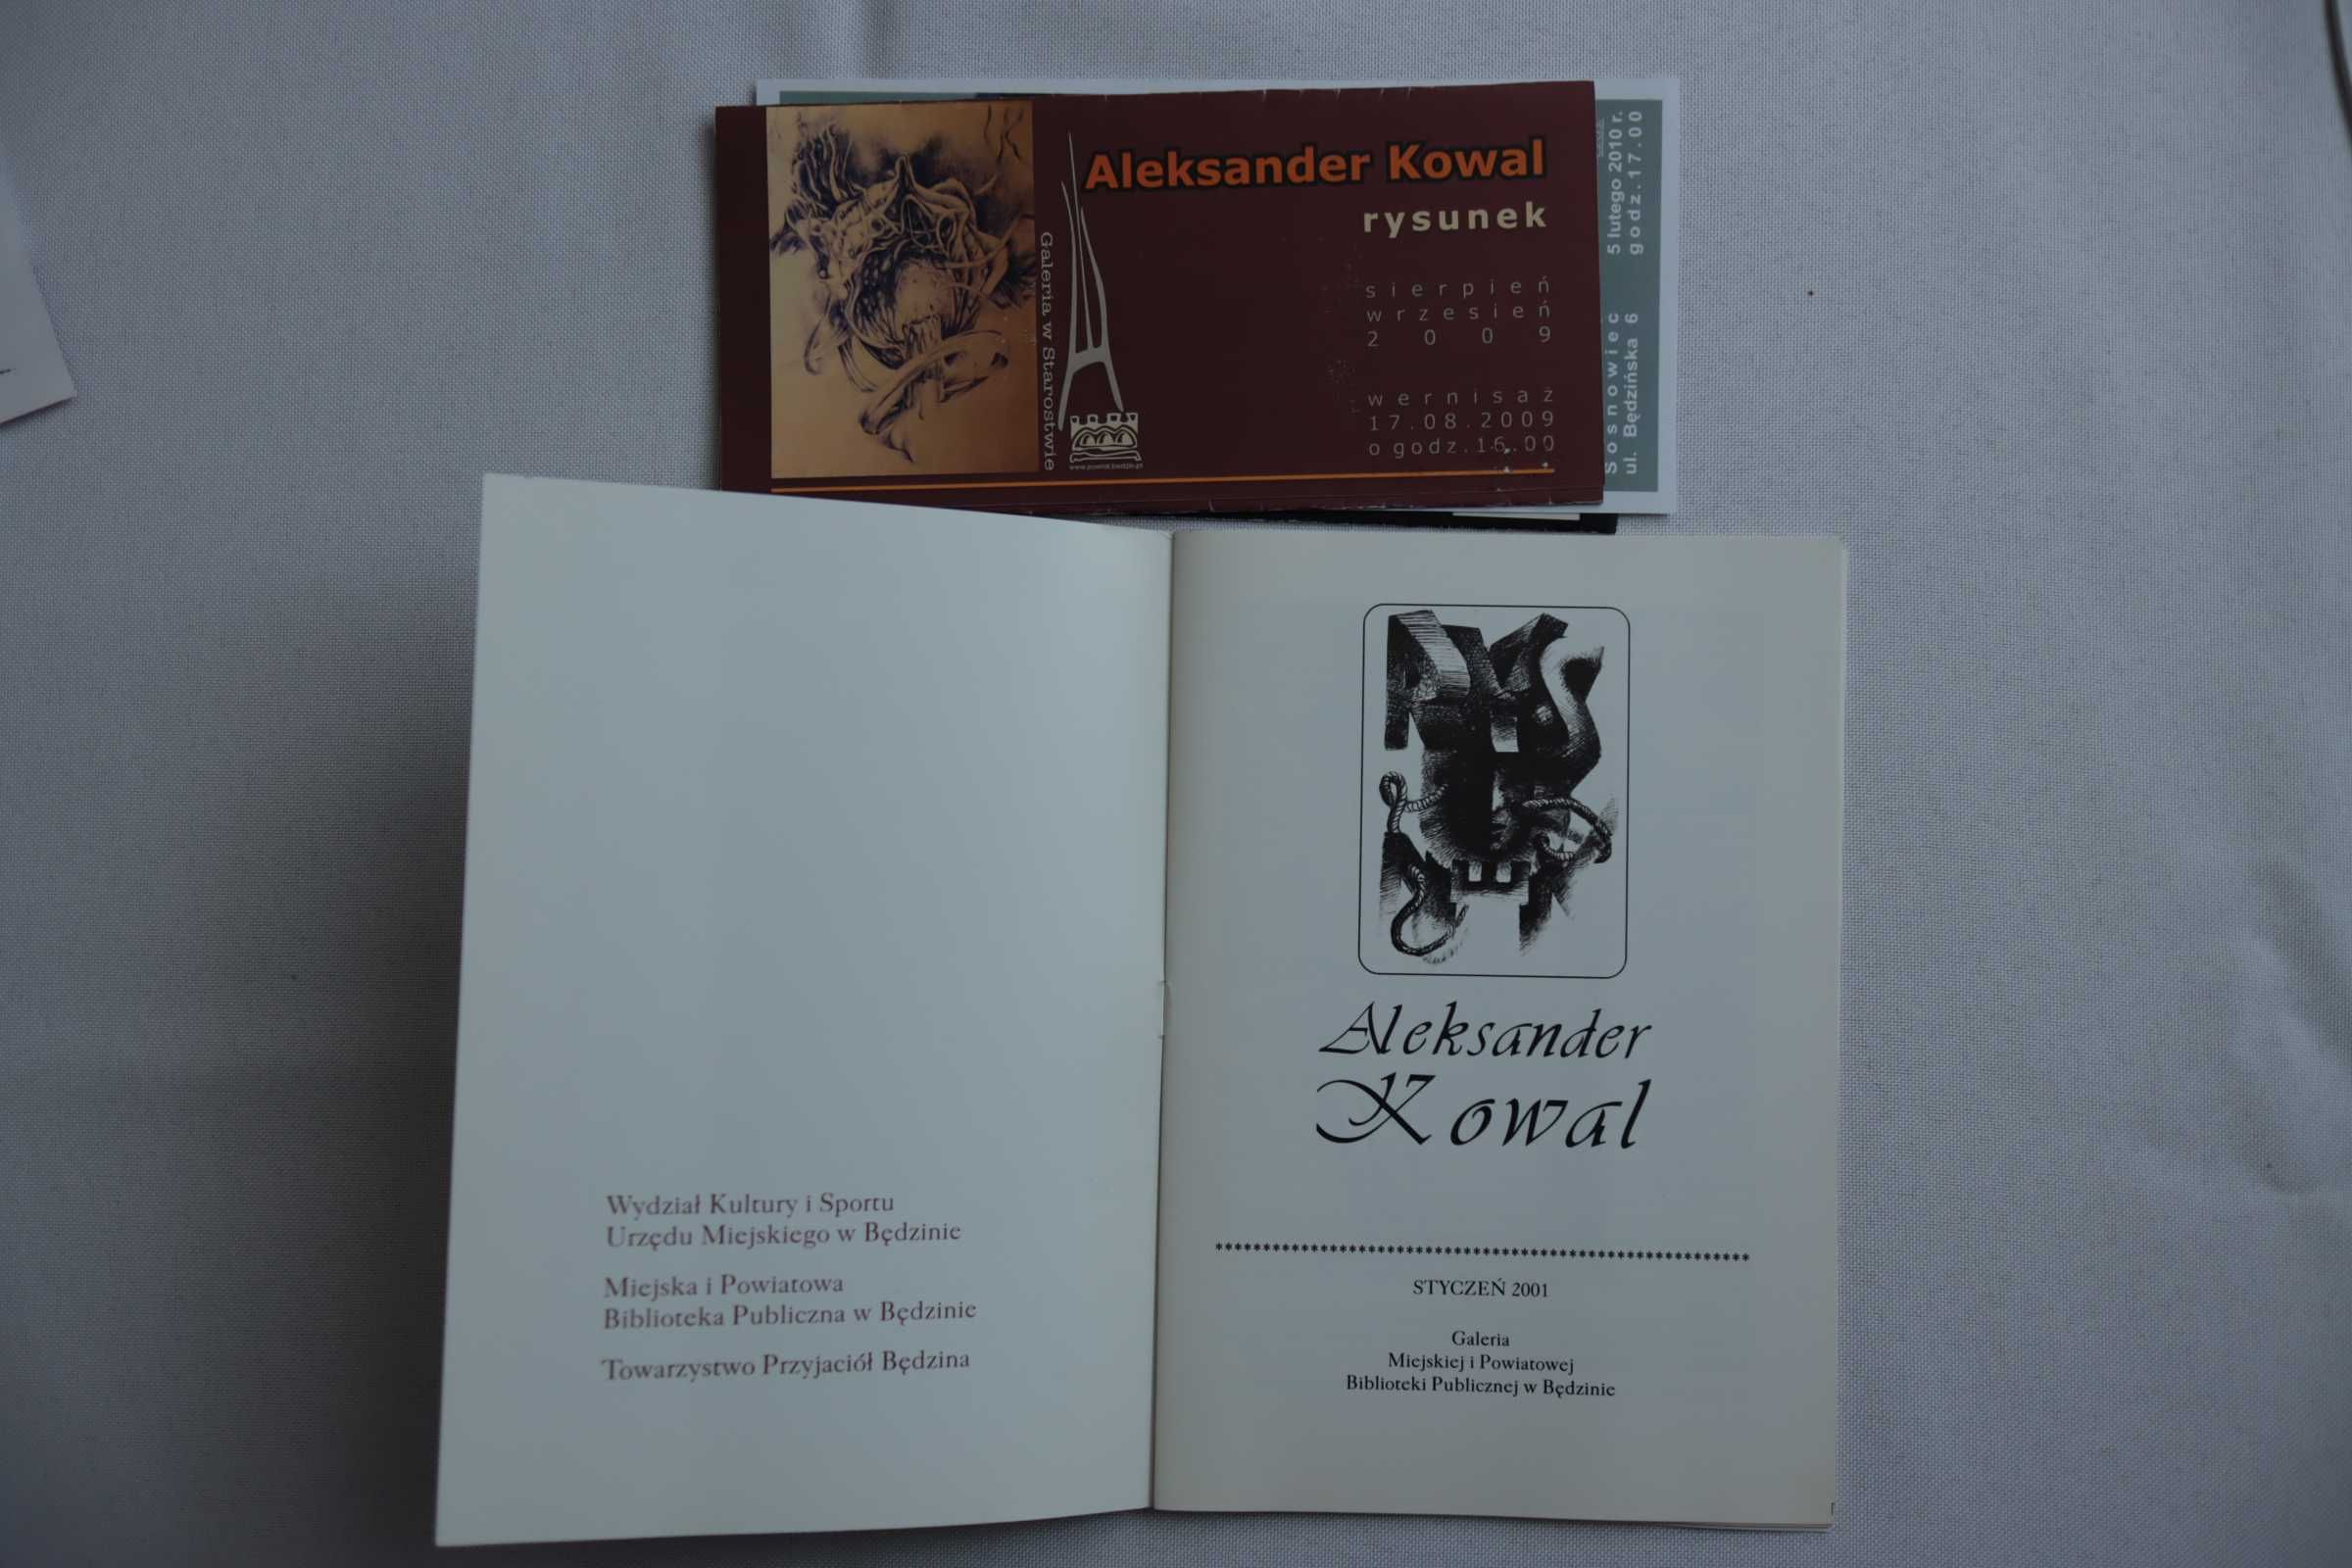 Aleksander Kowal folder